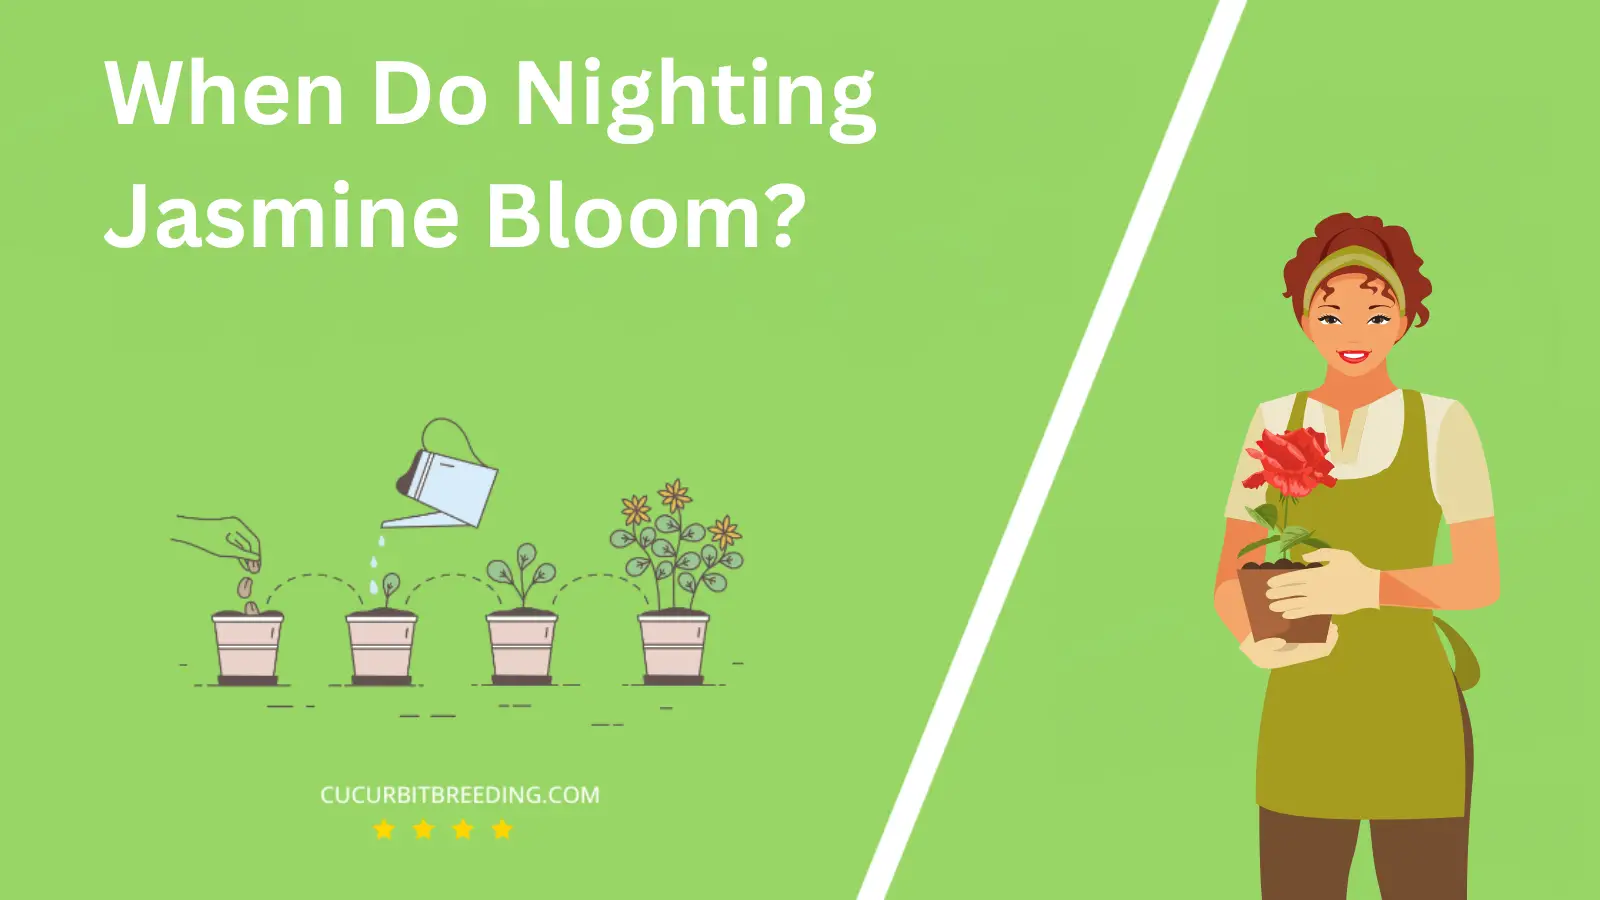 When Do Nighting Jasmine Bloom?